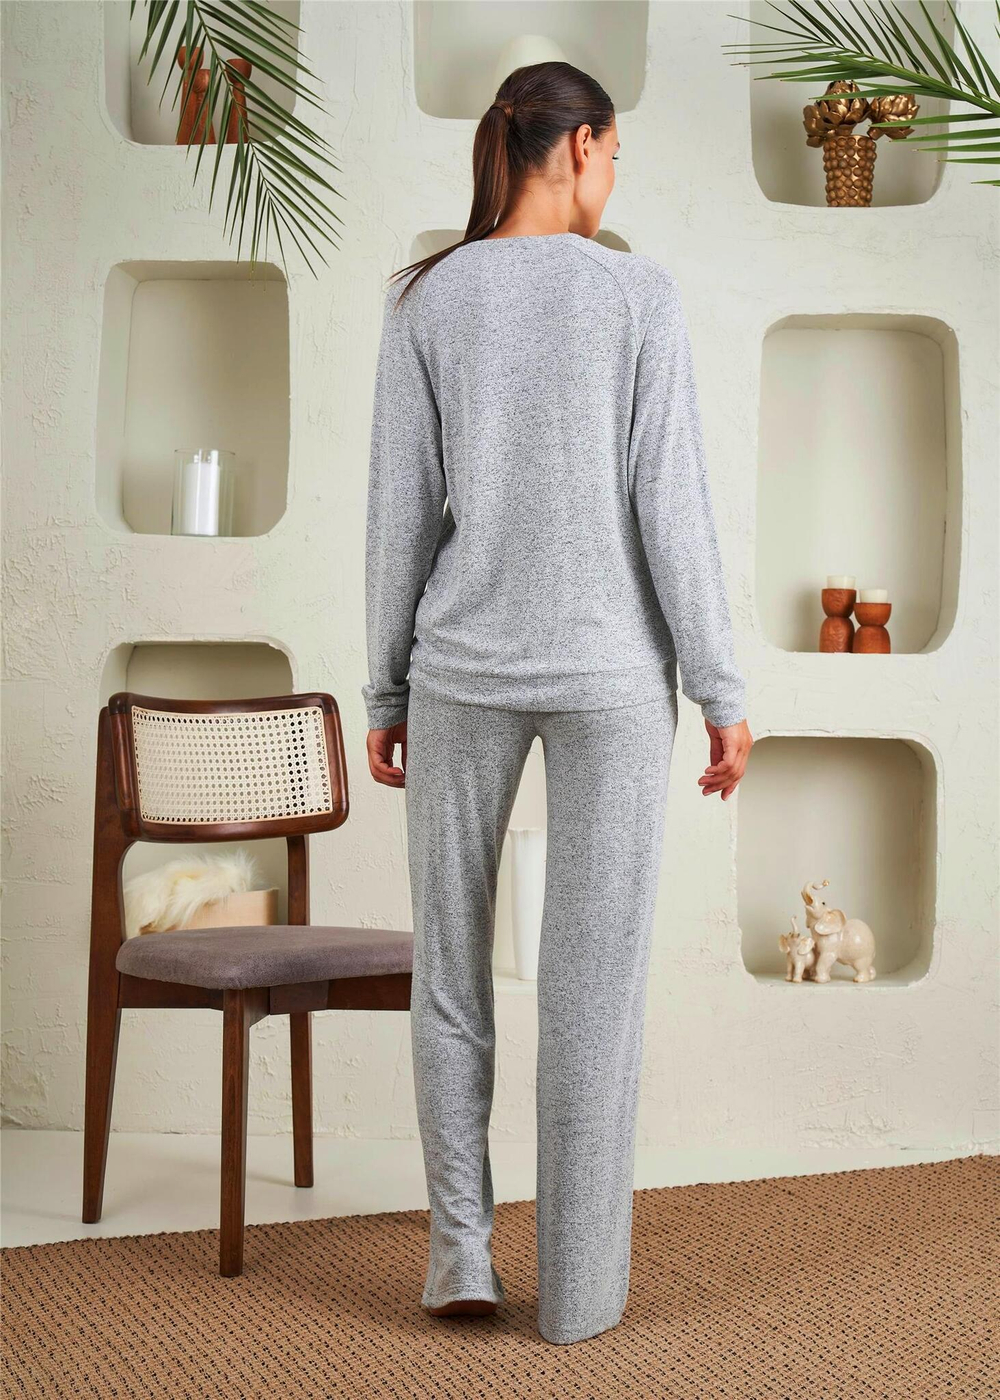 RELAX MODE - Женская пижама с брюками - 10745